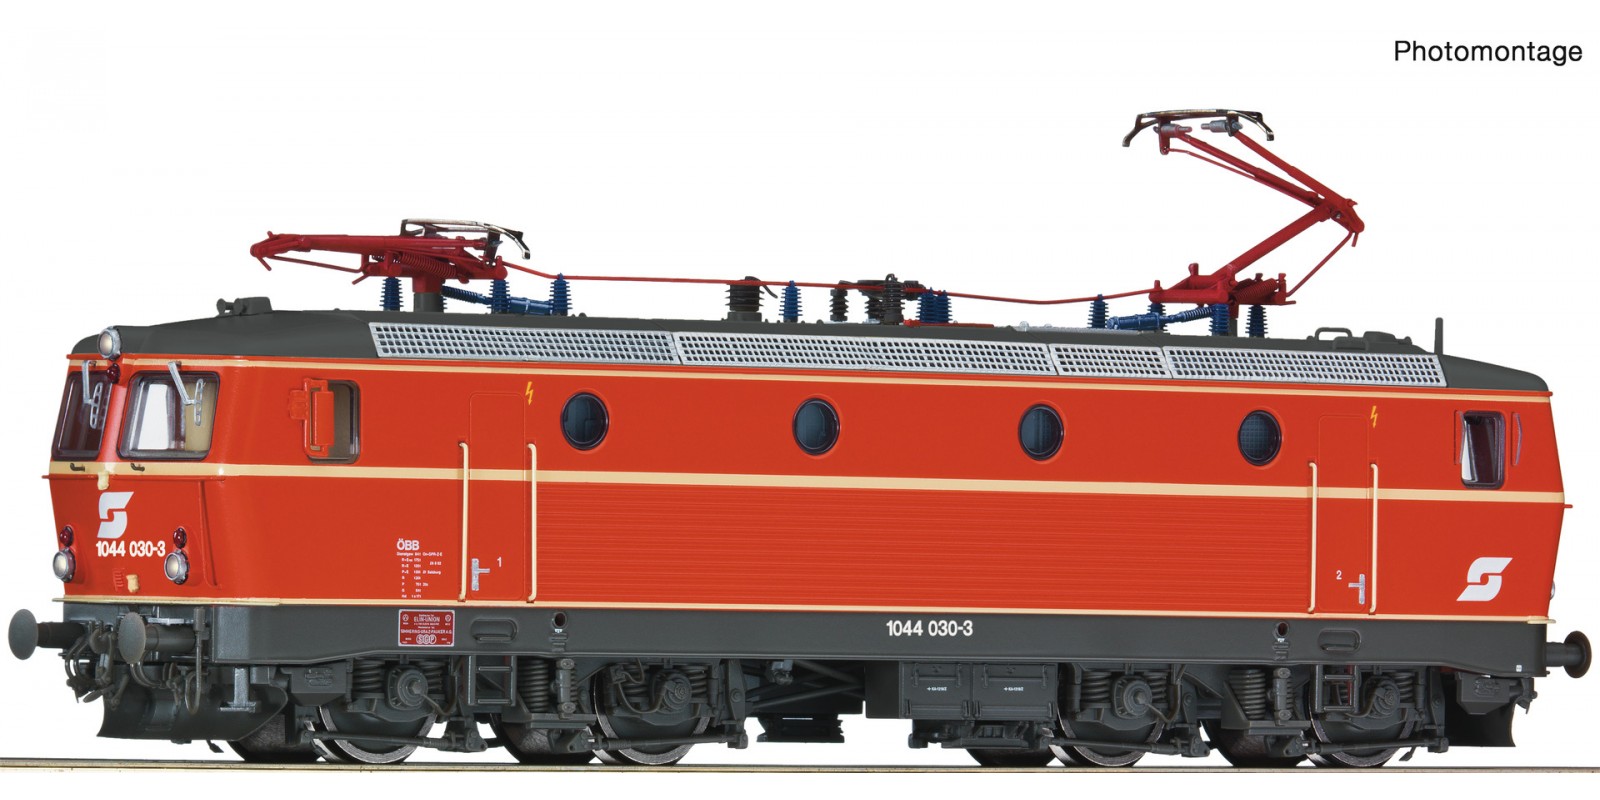 RO78432 Electric locomotive 1044 030-3, ÖBB